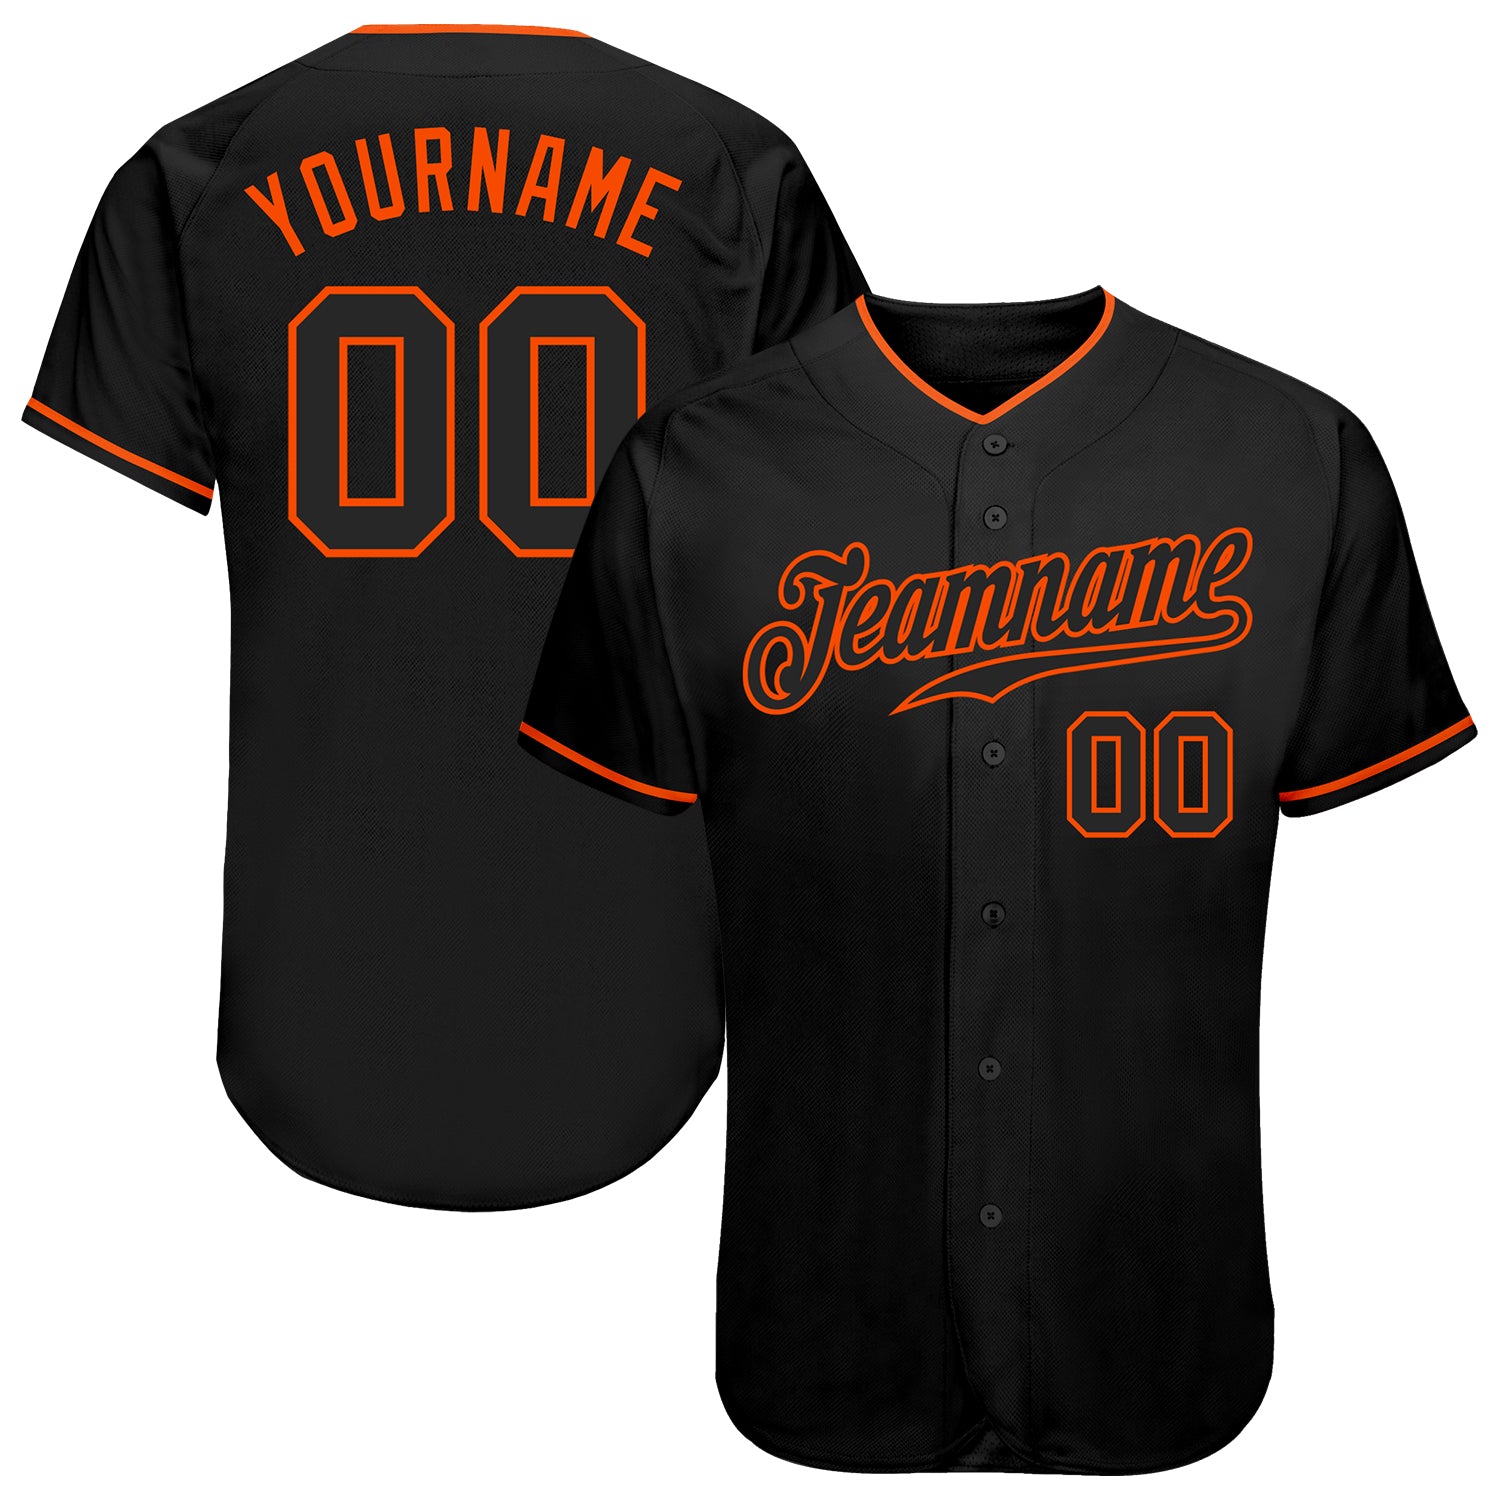 Design Team Baseball Black Orange Authentic Black Jersey On Sale ...